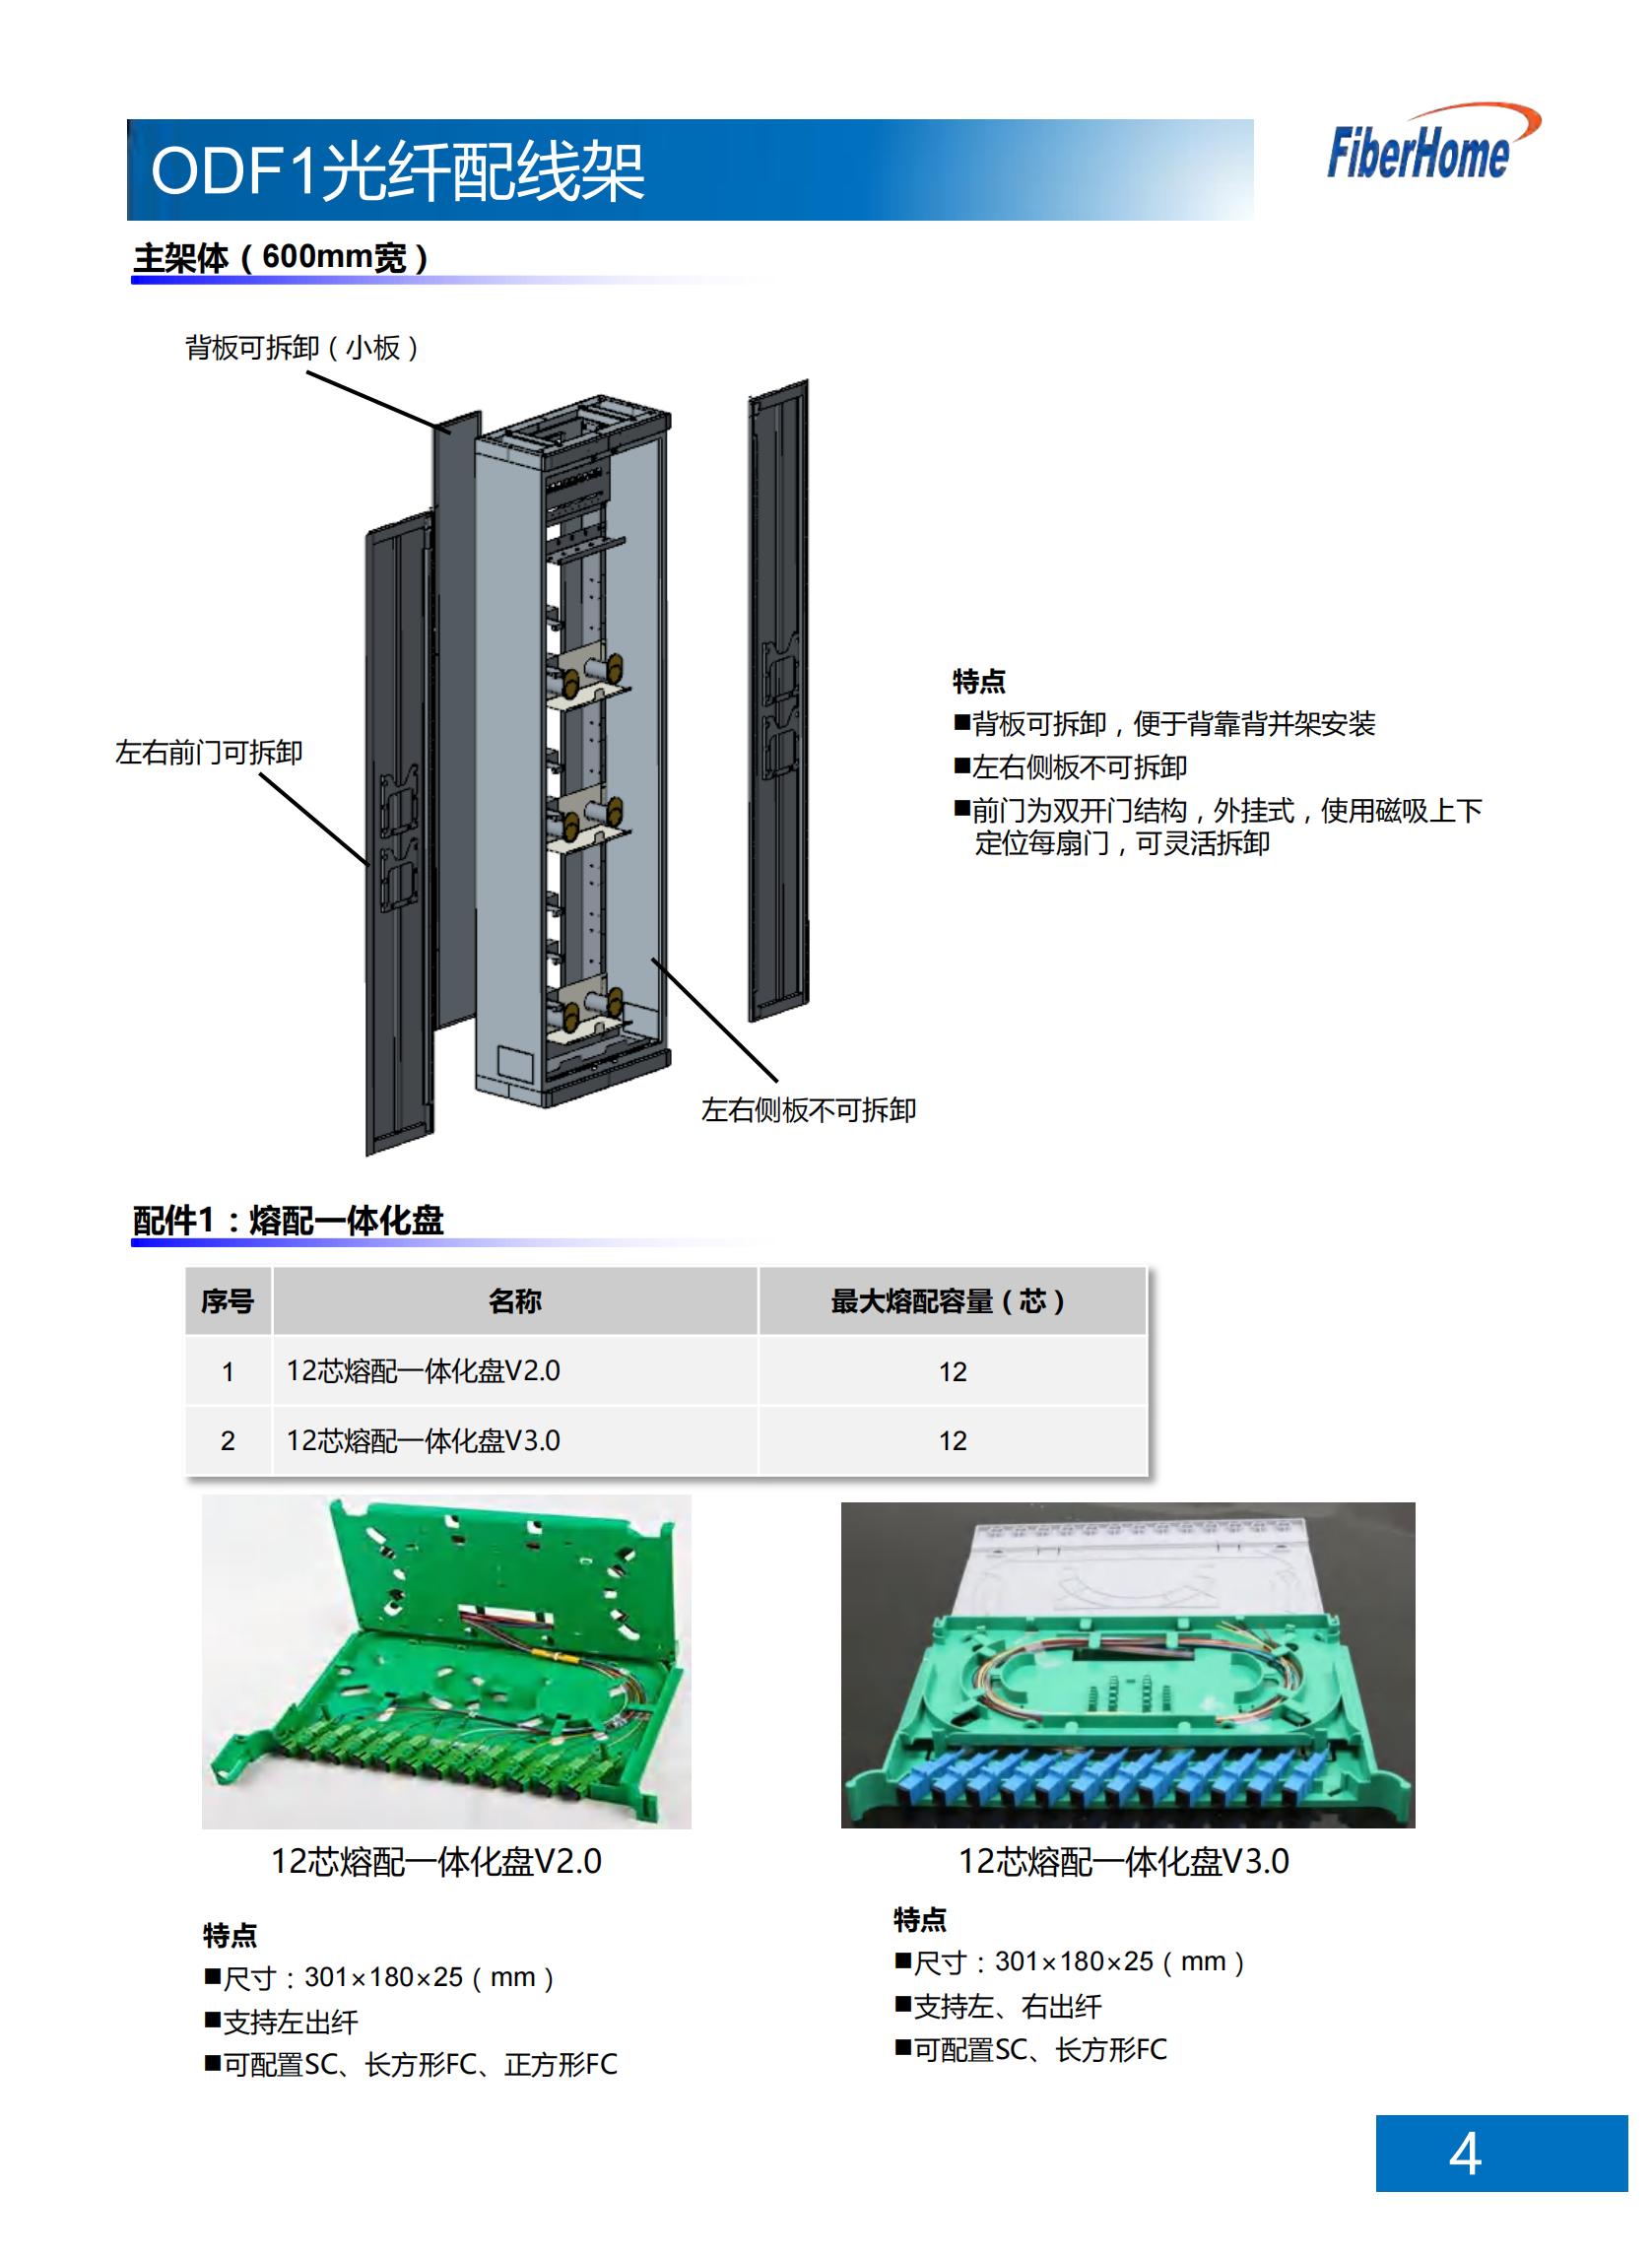 ODF101-576-A3 ODF光纤配线架 （576芯落地式 无子框型 不带熔纤盘）